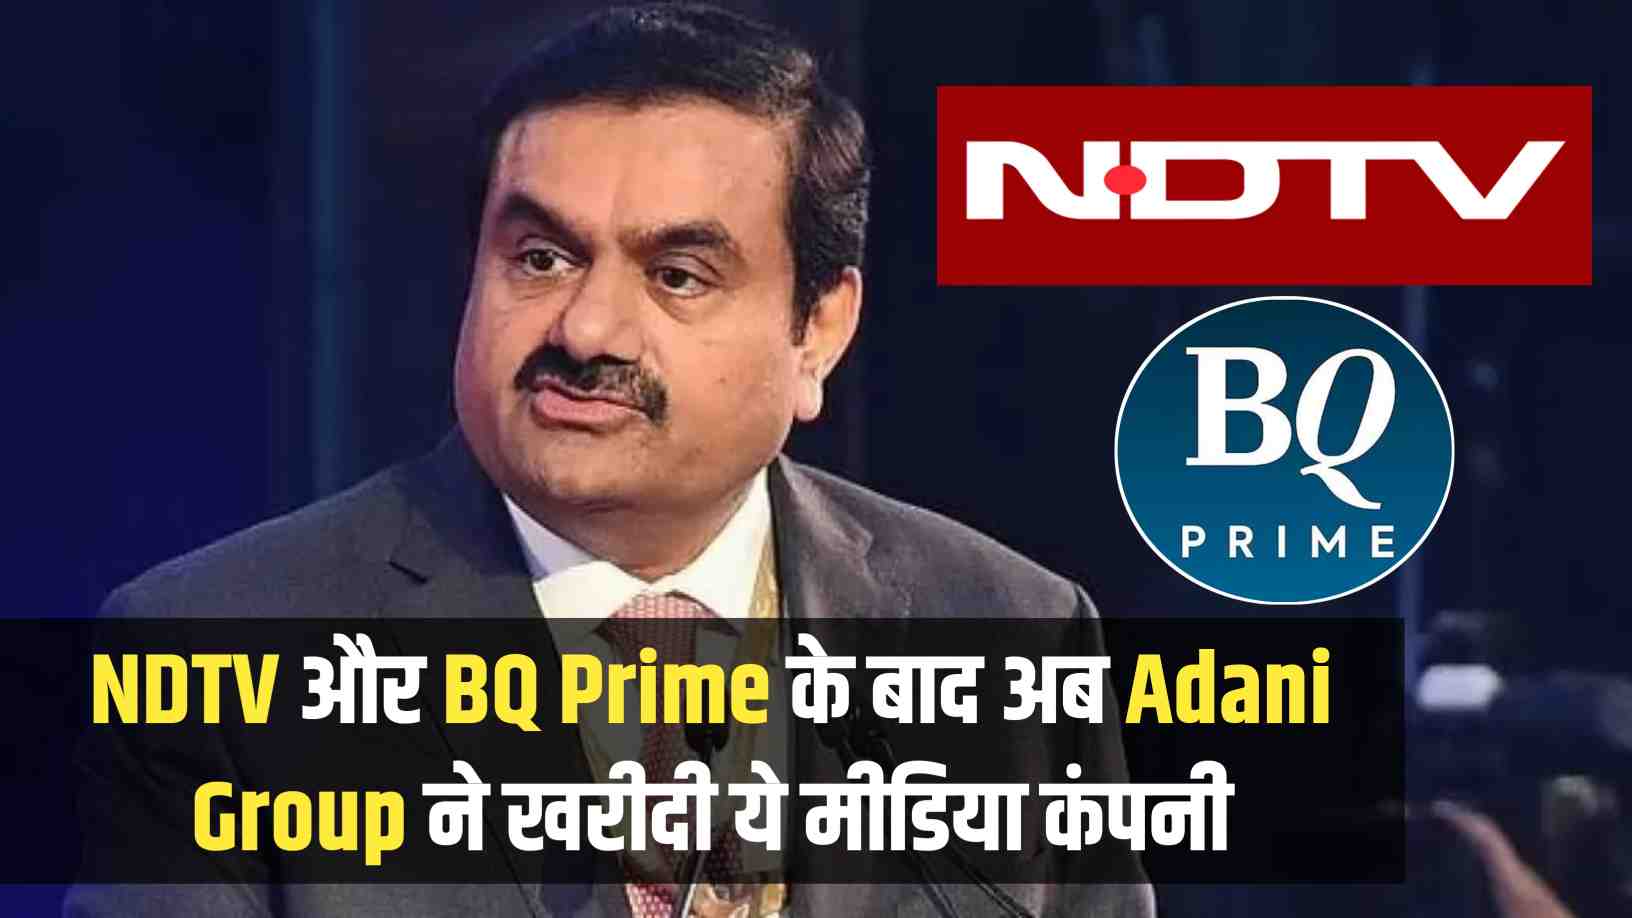 Gautam Adani News/After NDTV and BQ Prime, now Adani Group bought ians media company